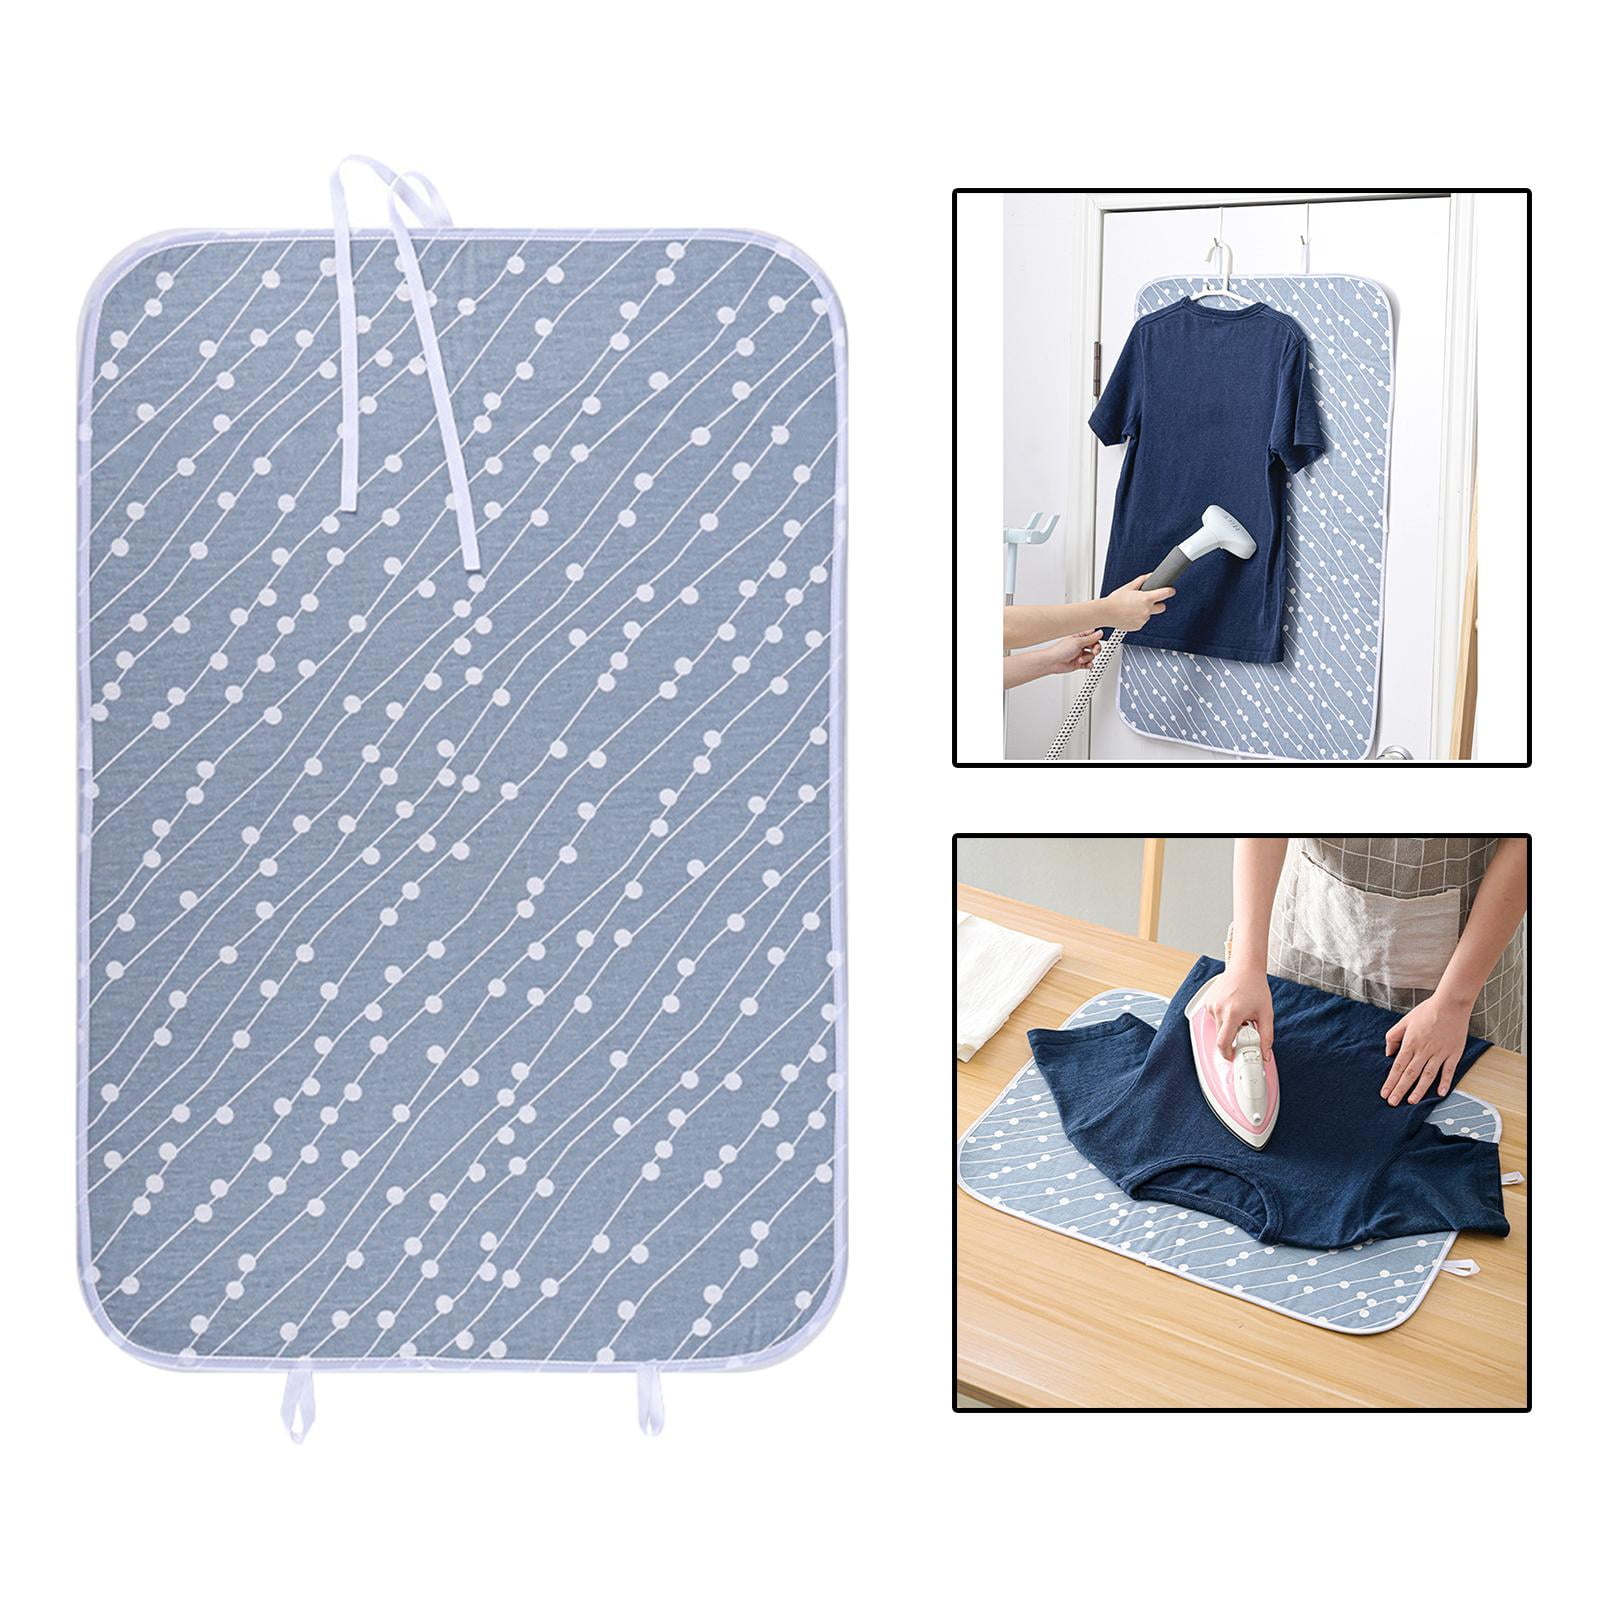 NILZA Portable Ironing Mat Ironing Board, Folding Ironing Pad Mat Cotton,  Heat Resistant Ironing Blanket, Ironing Pad for Table,Washer and Dryer